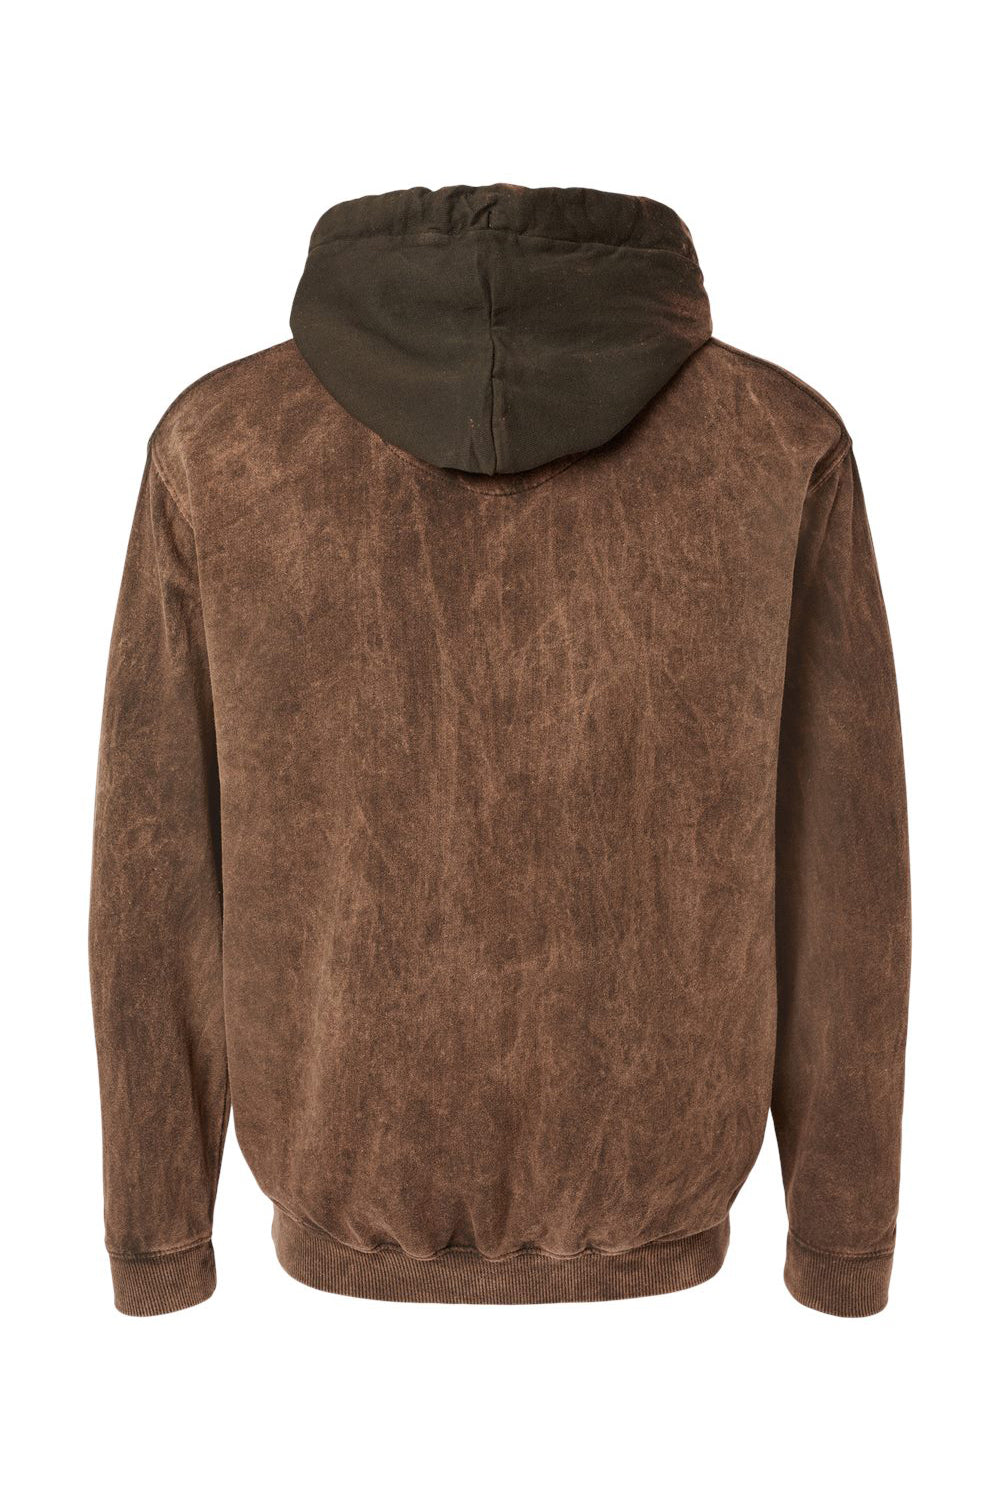 Dyenomite 854MW Mens Premium Fleece Mineral Wash Hooded Sweatshirt Hoodie Hounddog Brown Flat Back